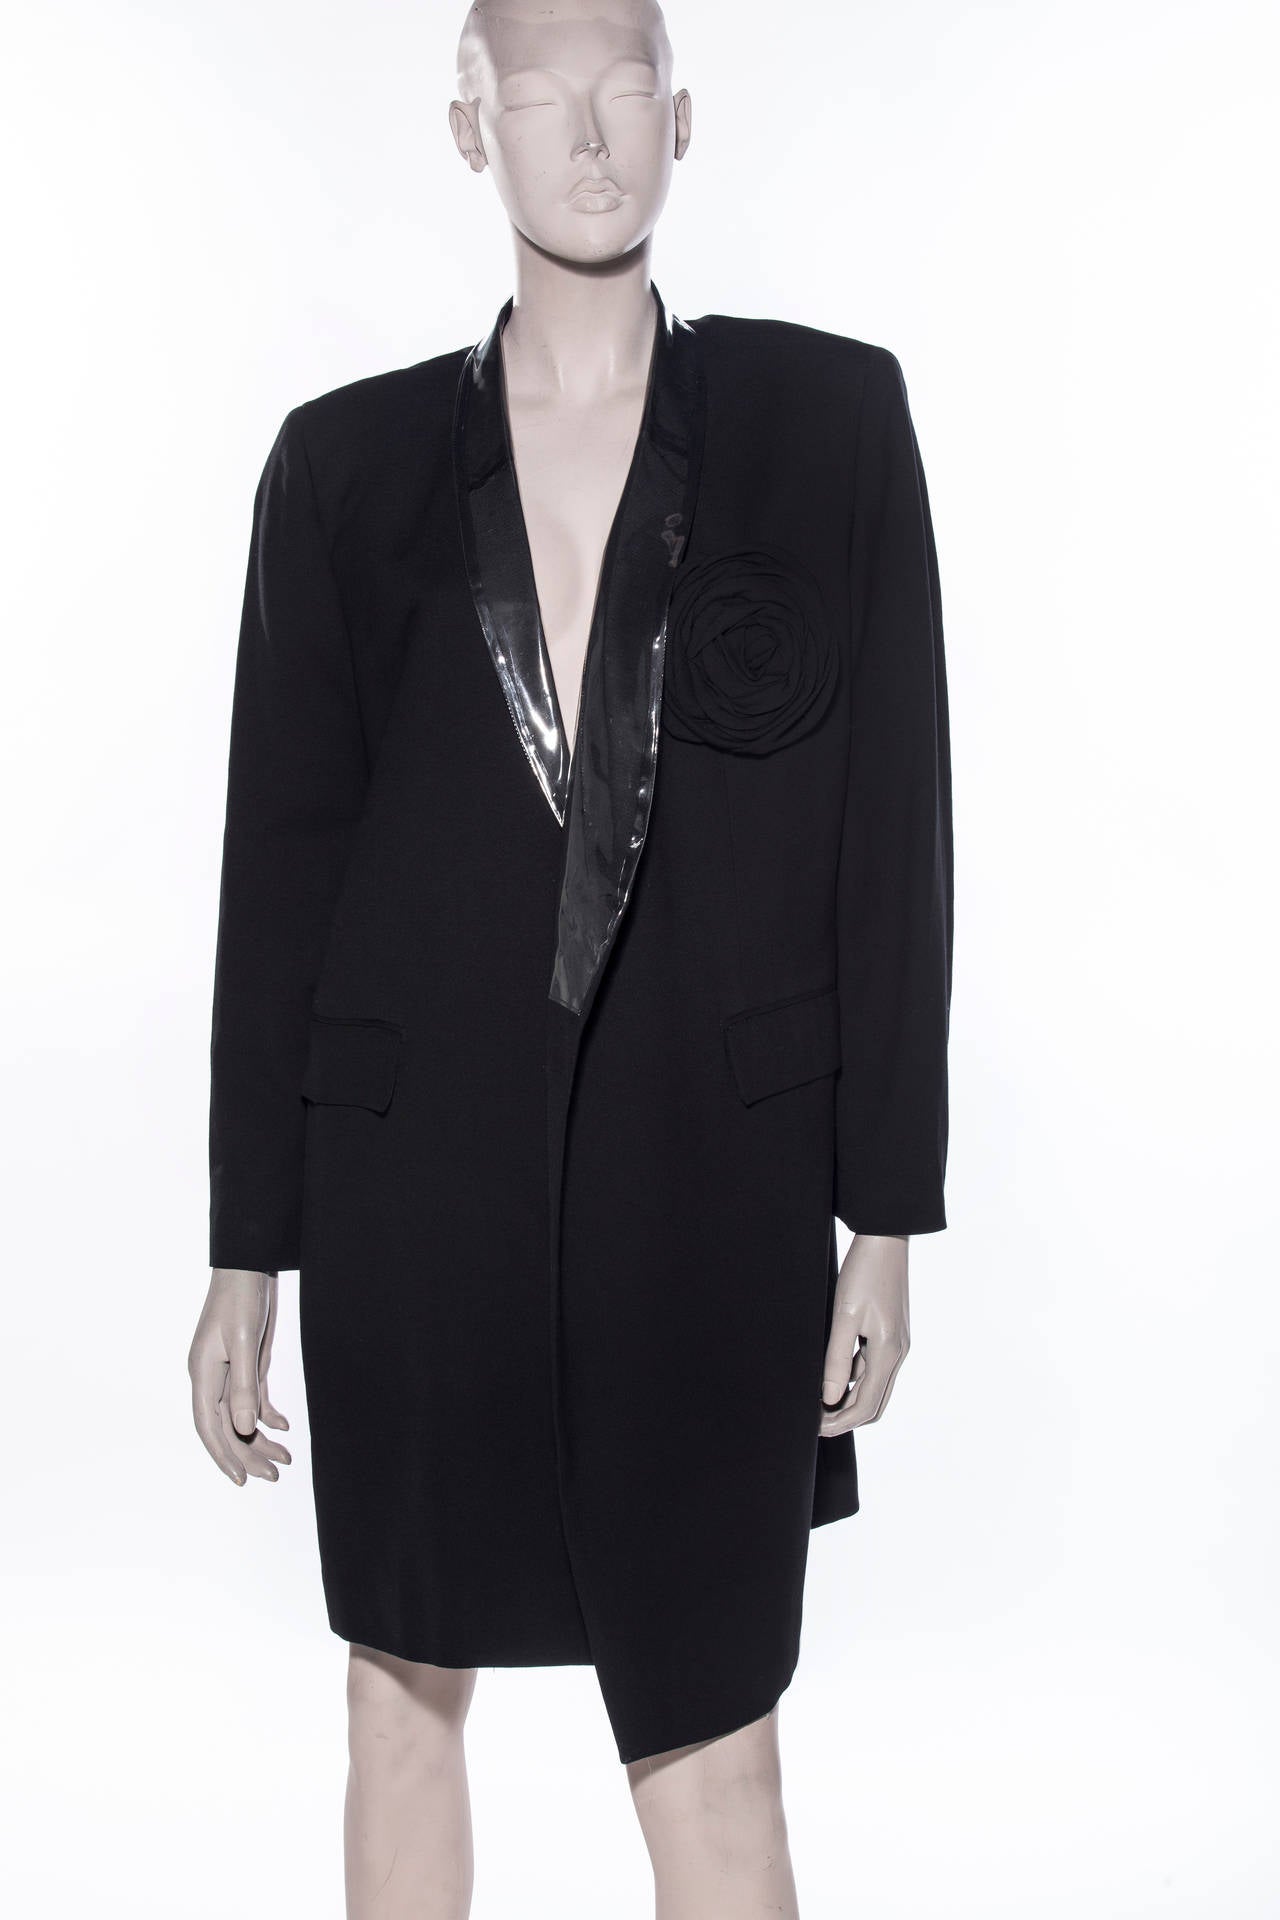 Comme des Garçons, circa 1991, black wool blazer with PVC lapel, rosette detail, dual flap pockets at sides and single button closure.

Bust 32”, Waist 30”, Shoulder 17”, Length 36”